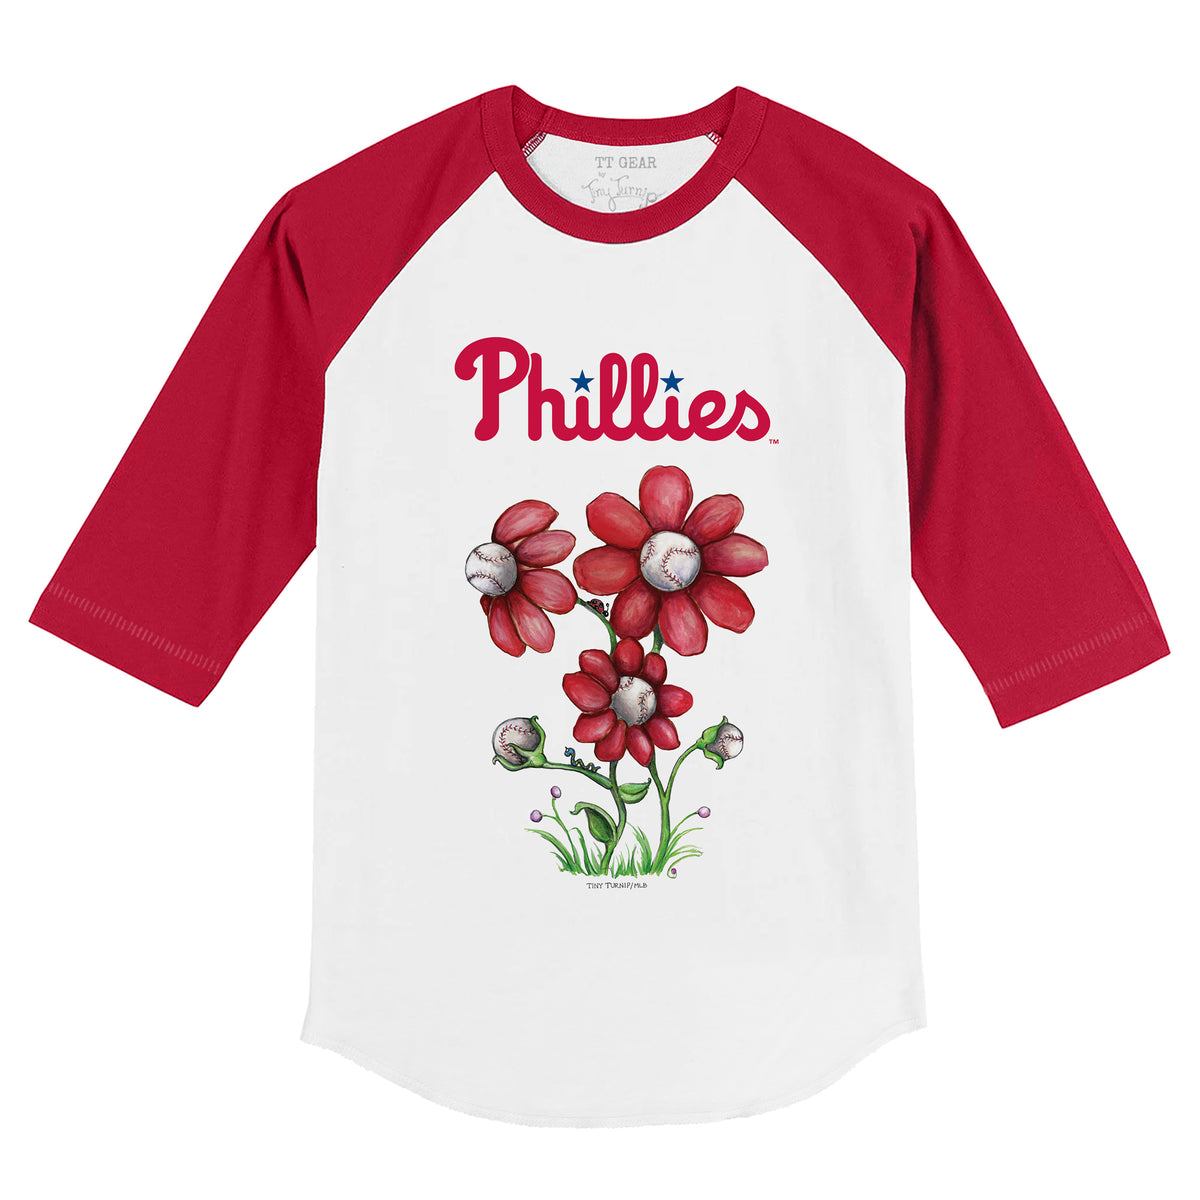 Youth Tiny Turnip White Philadelphia Phillies Blooming Baseballs T-Shirt Size: Small